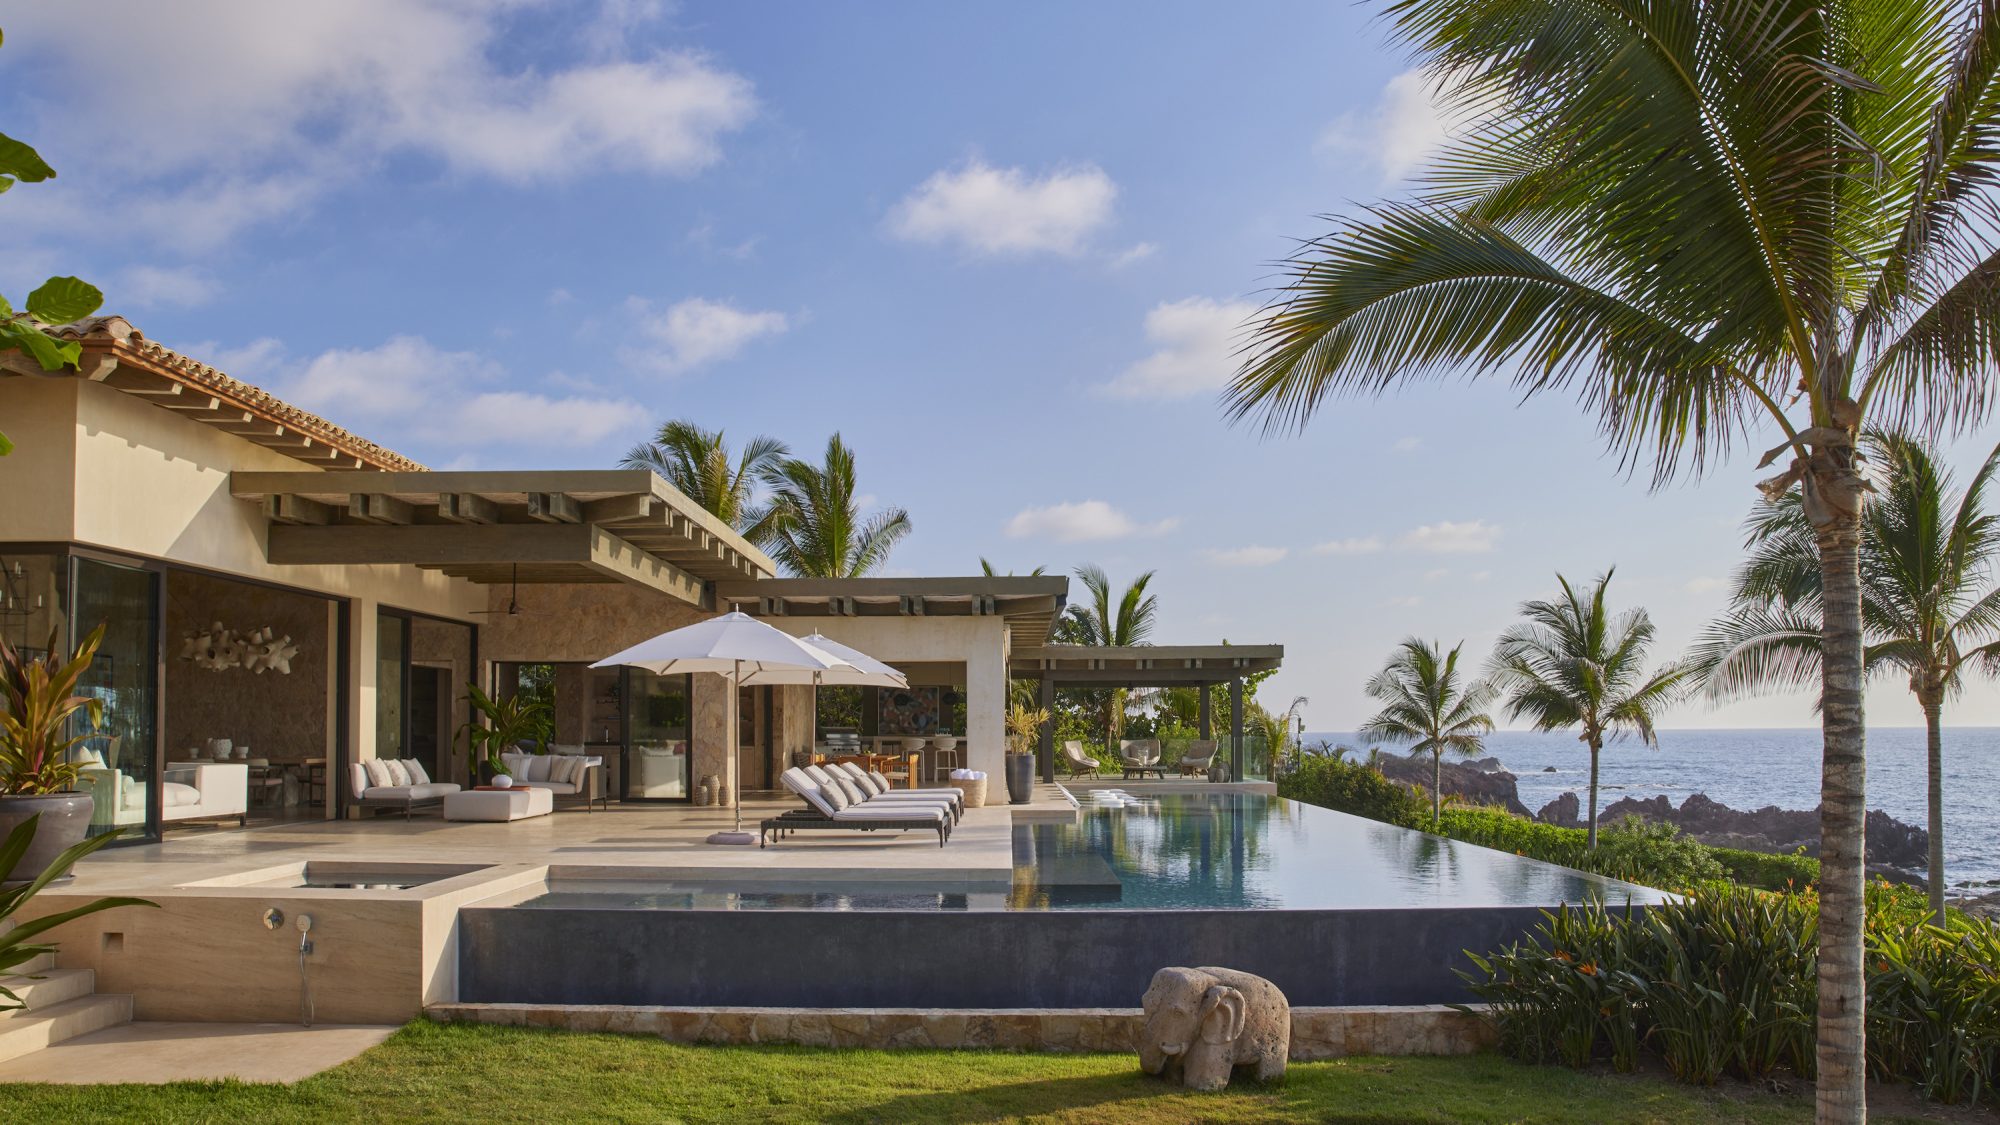 Casa Tesoro at Four Seasons Resort Punta Mita brings ultimate beachfront luxury